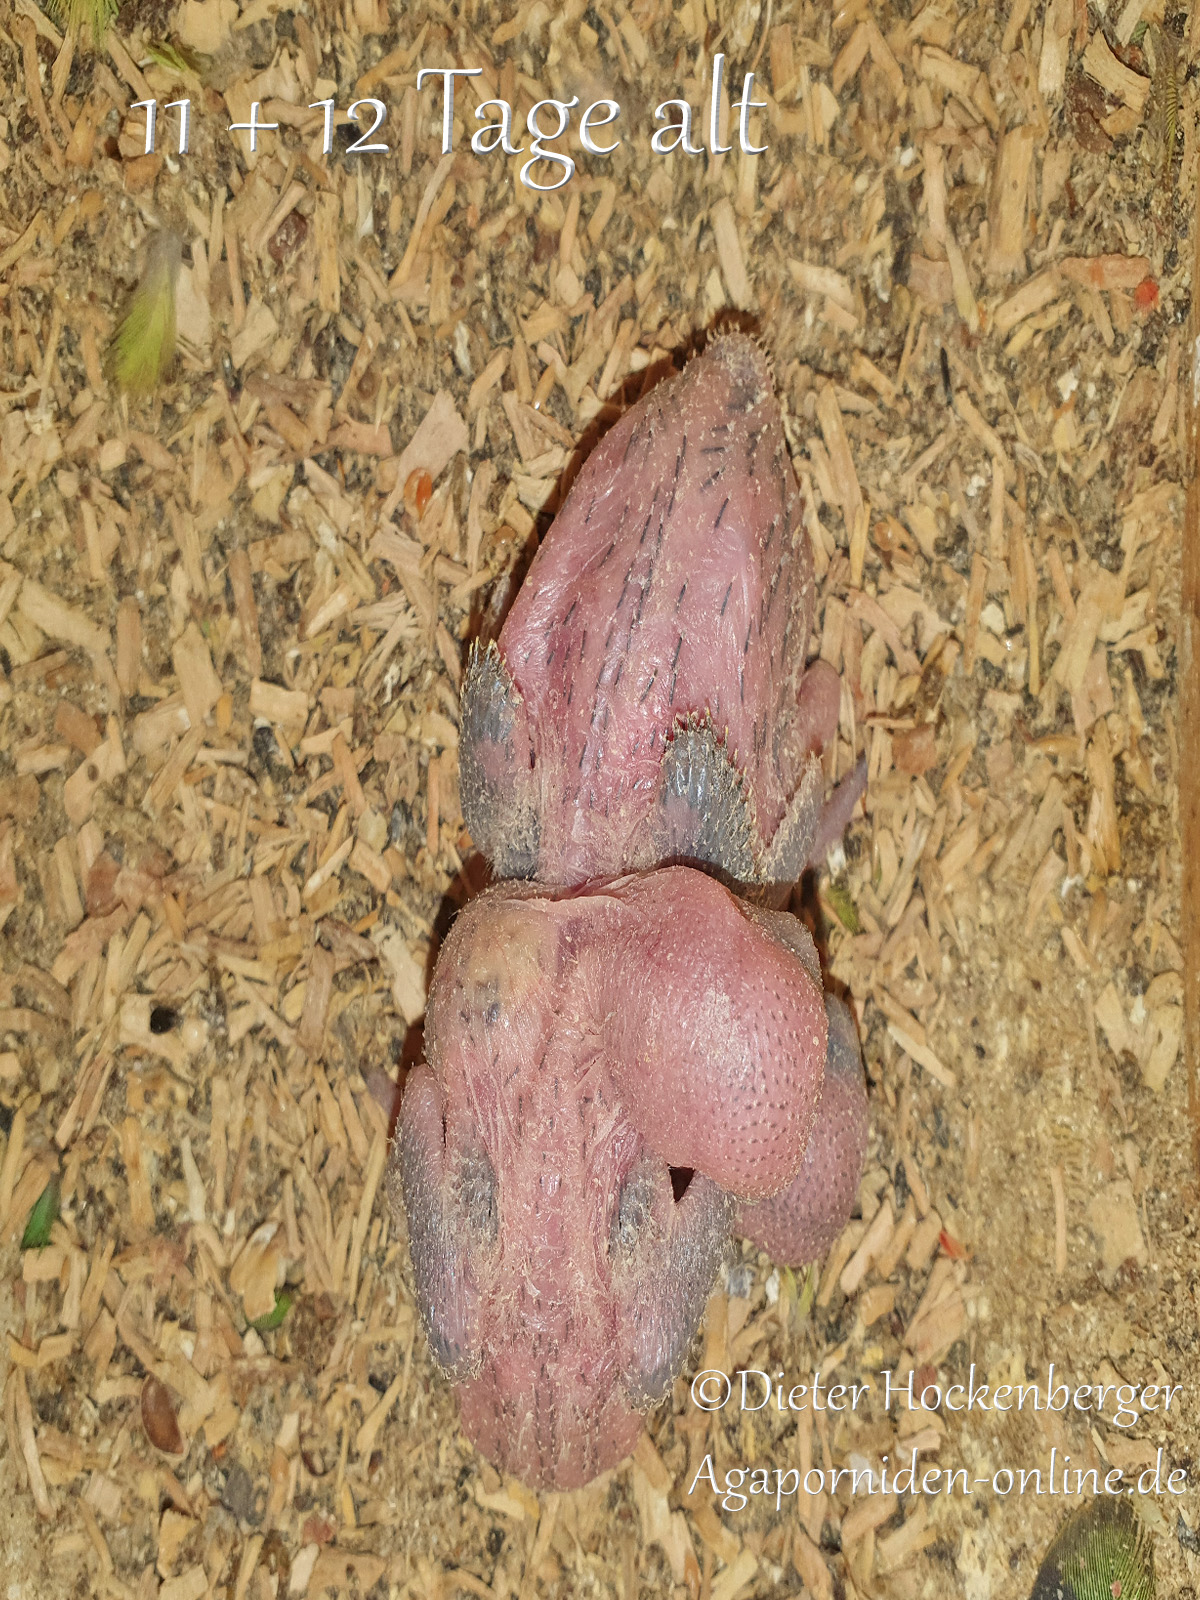 Bild zeigt 2 junge Taranta Bergpapageien, Agapornis taranta im Nest, 11 + 12 Tage alt